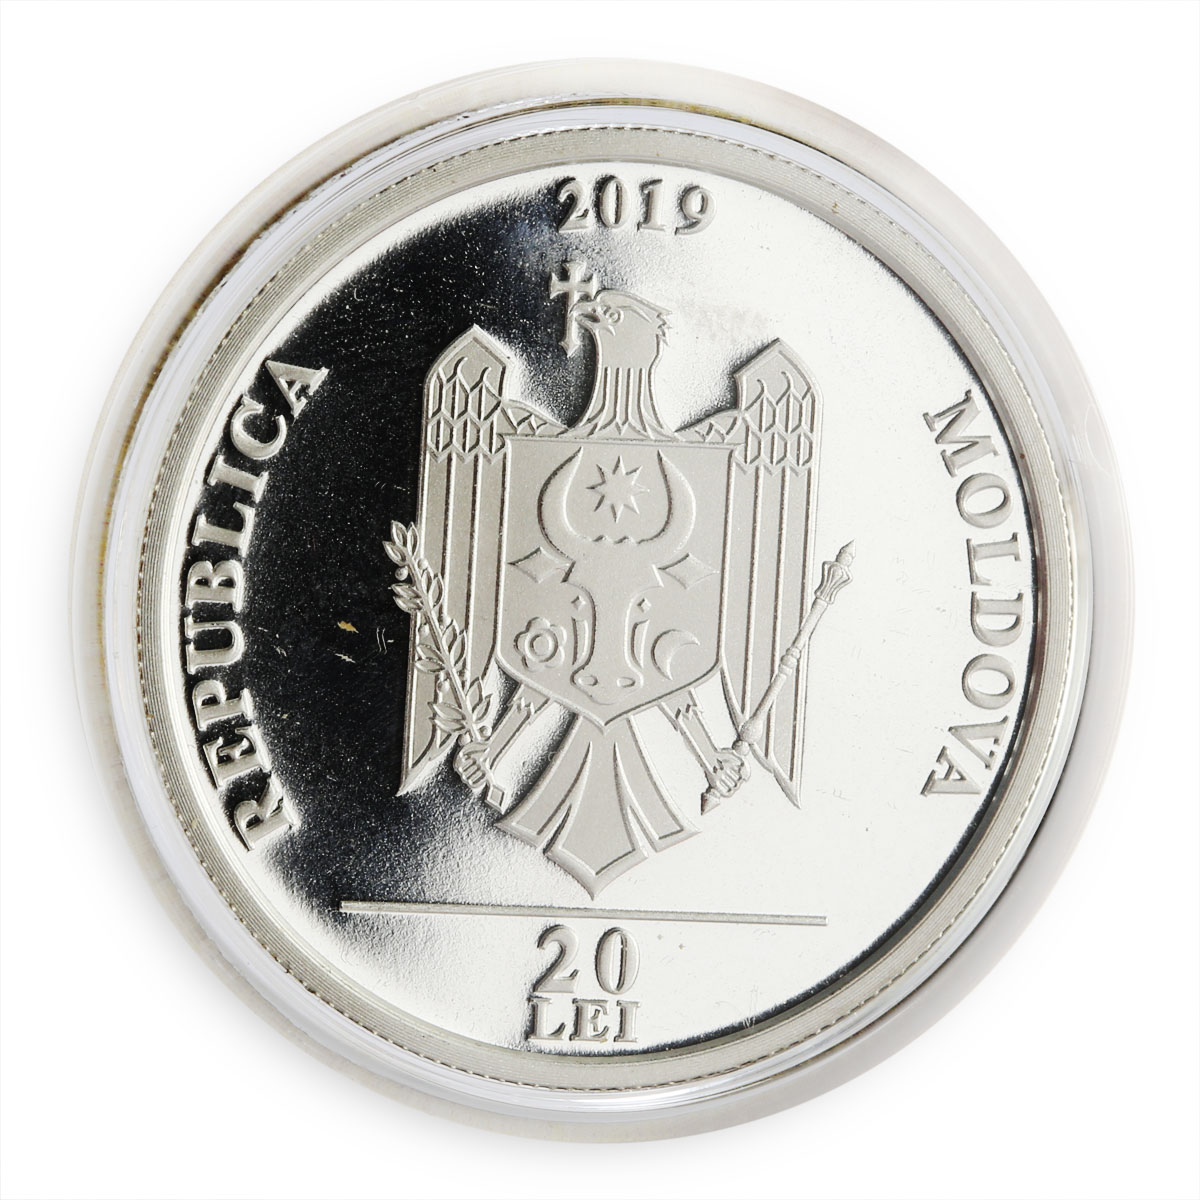 Moldova 20 lei Fat-Frumos Ileana Cosanzeana myth folklore proof coin 2019